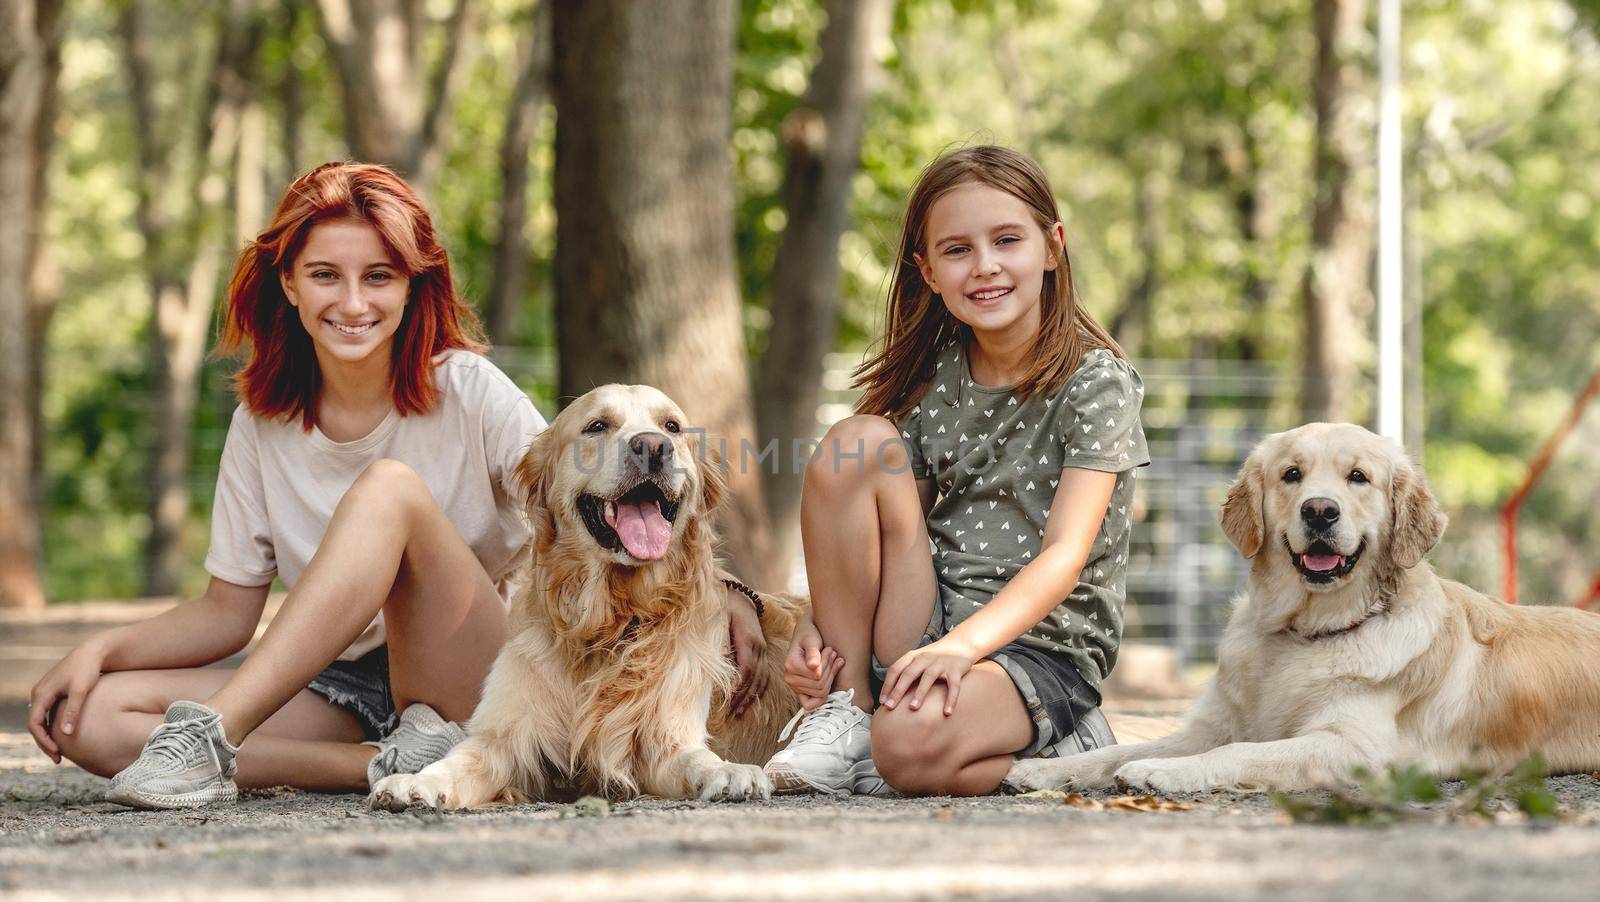 Girls with golden retriever dogs by tan4ikk1